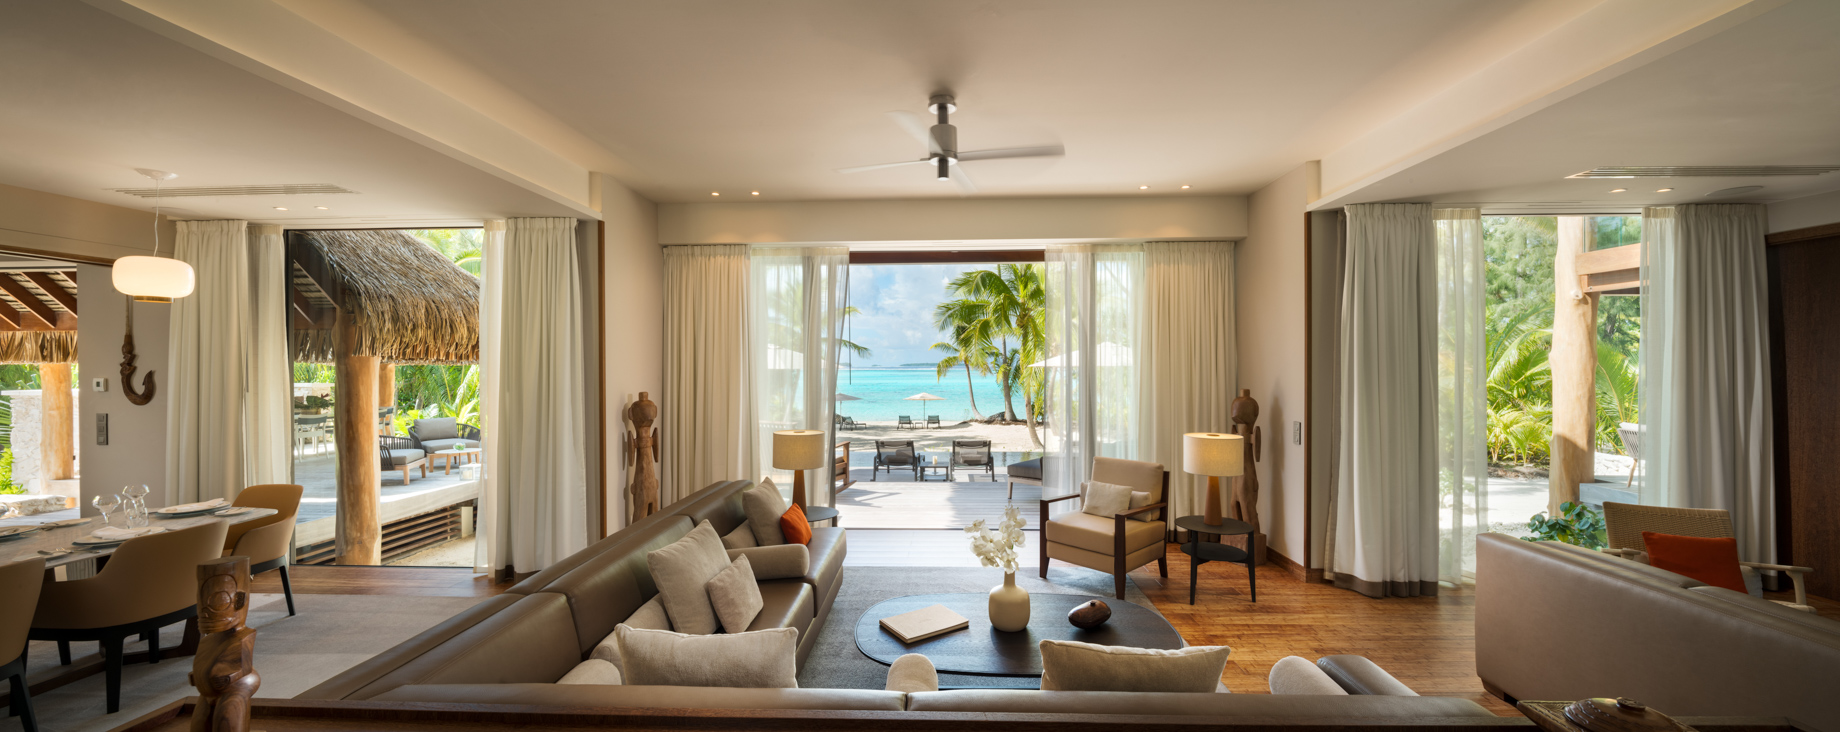 The Brando Resort – Tetiaroa Private Island, French Polynesia – The Brando Residence Living Room Ocean View